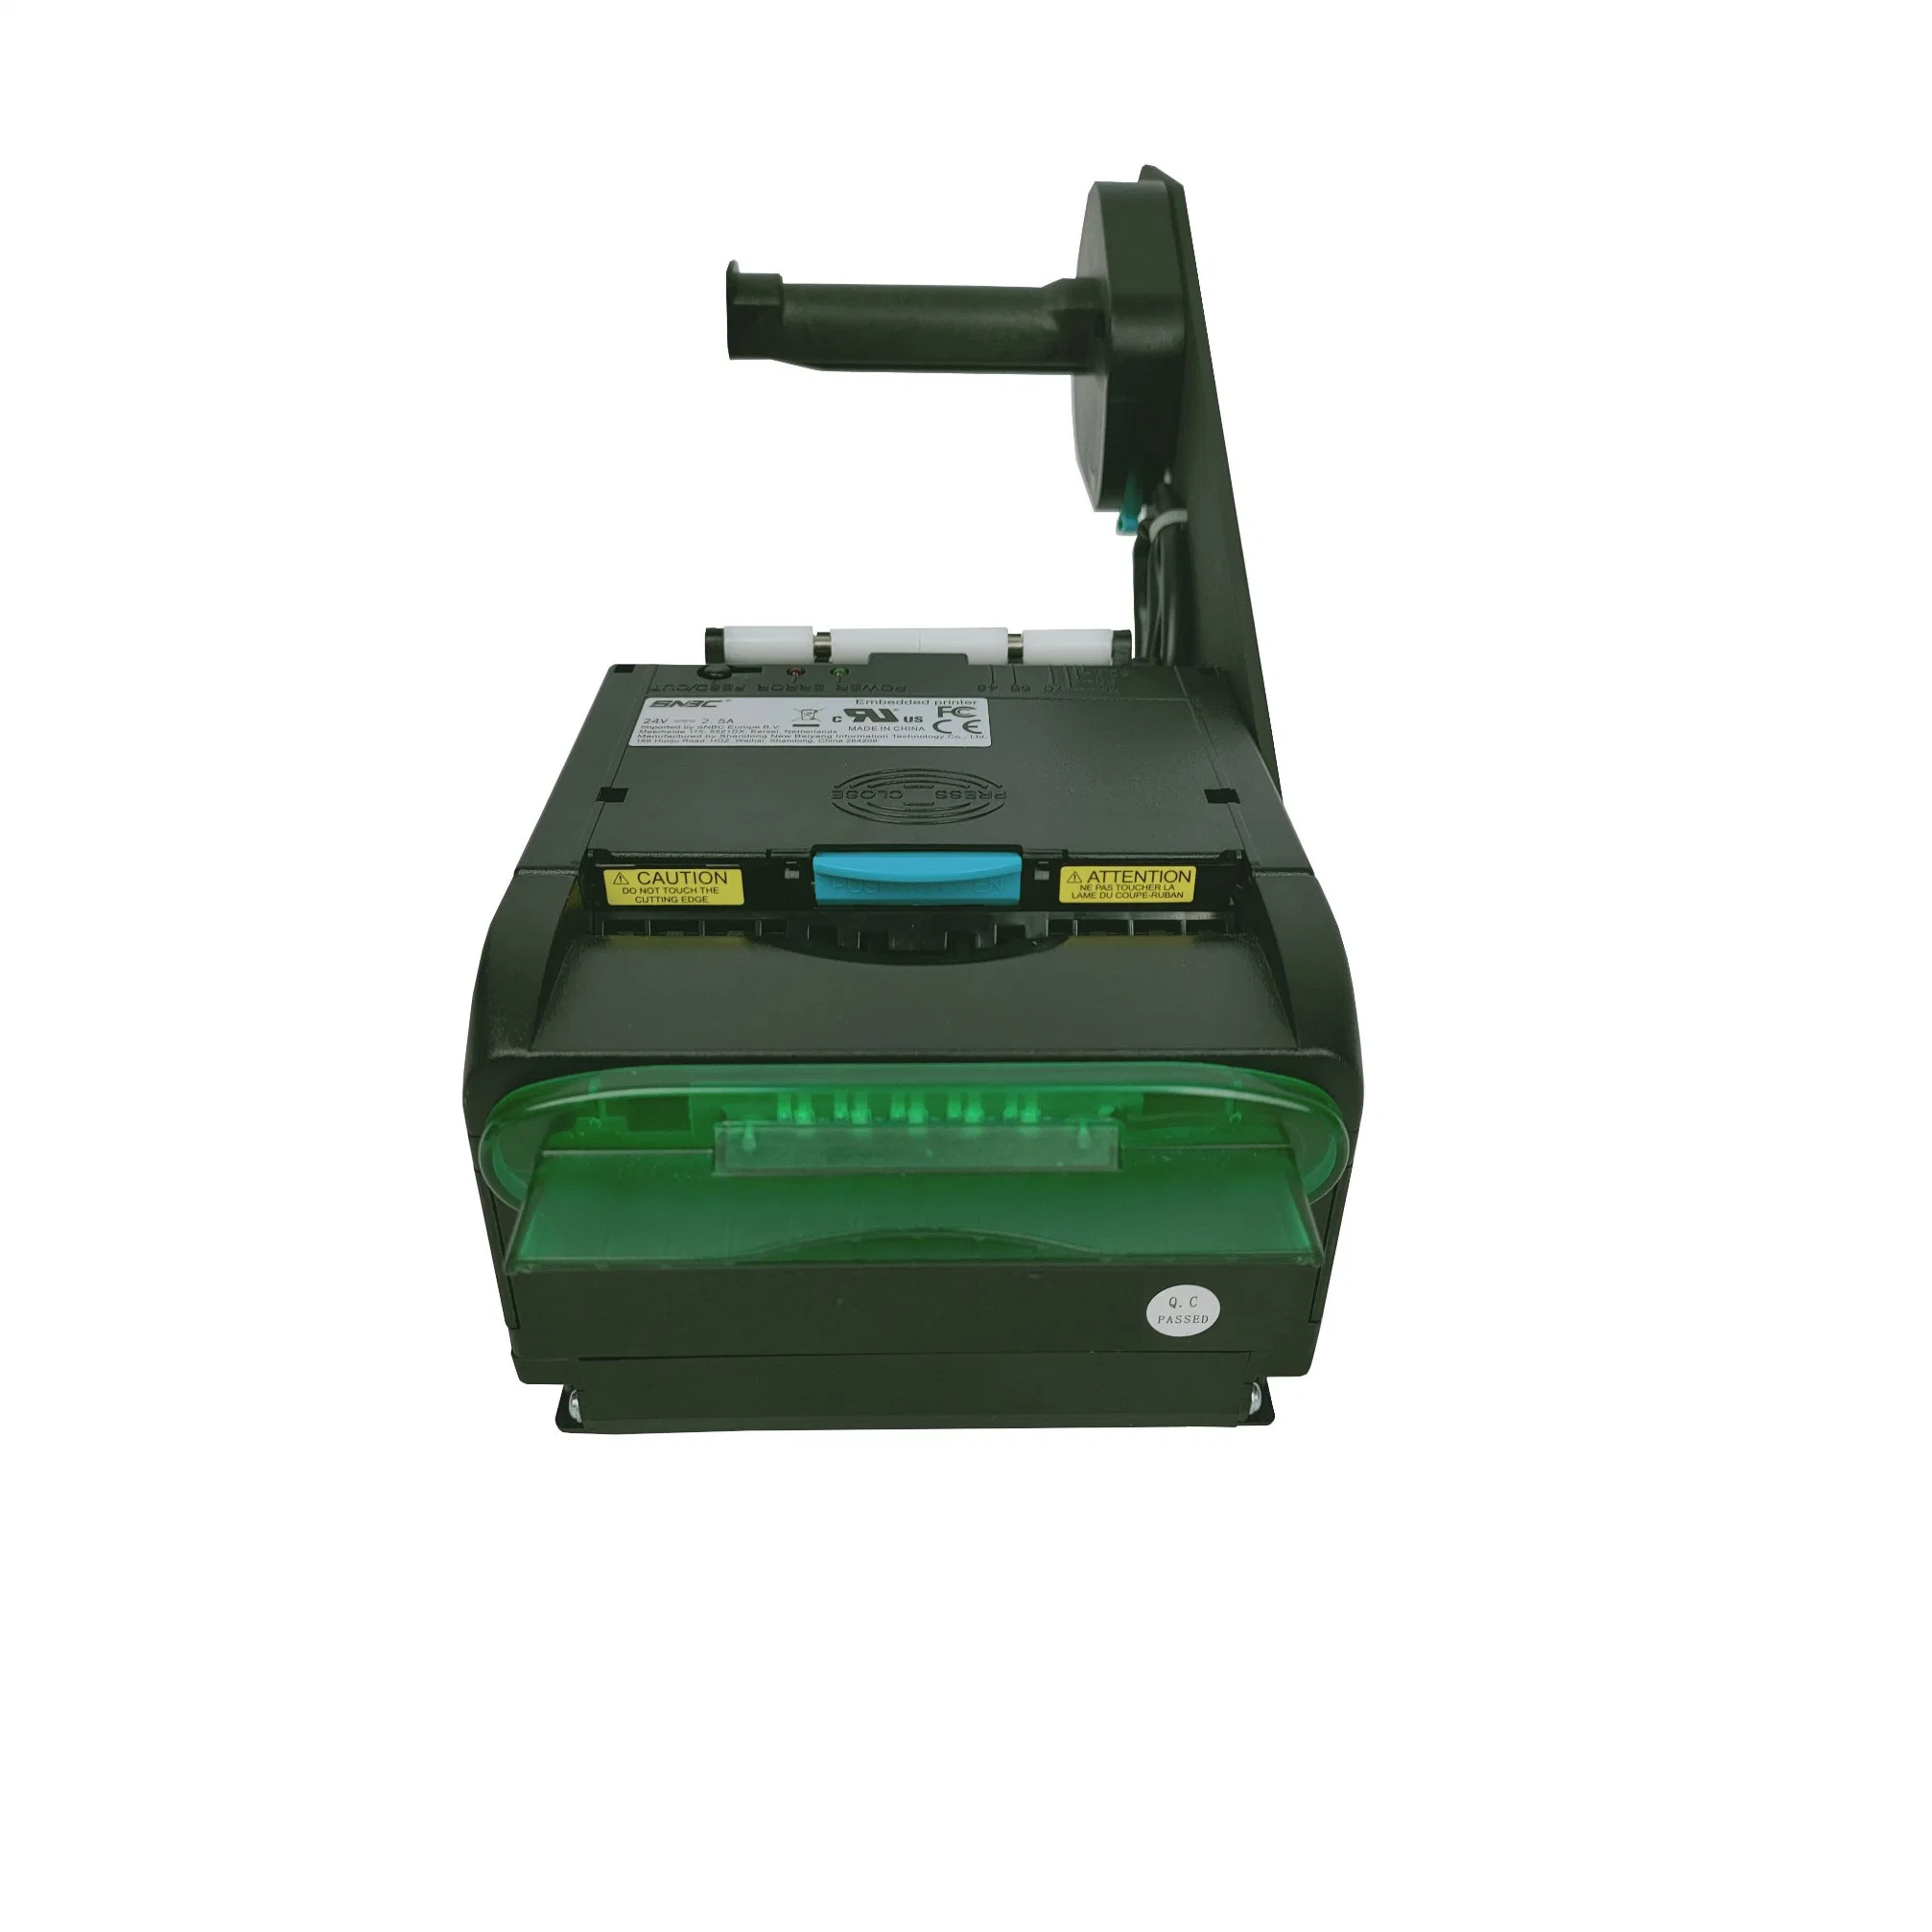 La calidad de la conciencia de OEM 58mm 80mm SNBC KT800 Impresora Térmica de kioskos ticket impresora de kiosco módulos